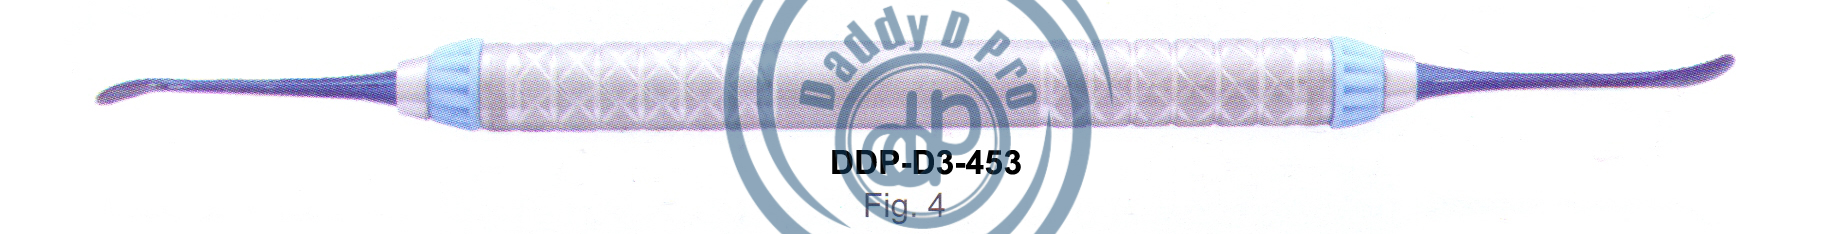 images/DDP-D3-453.png